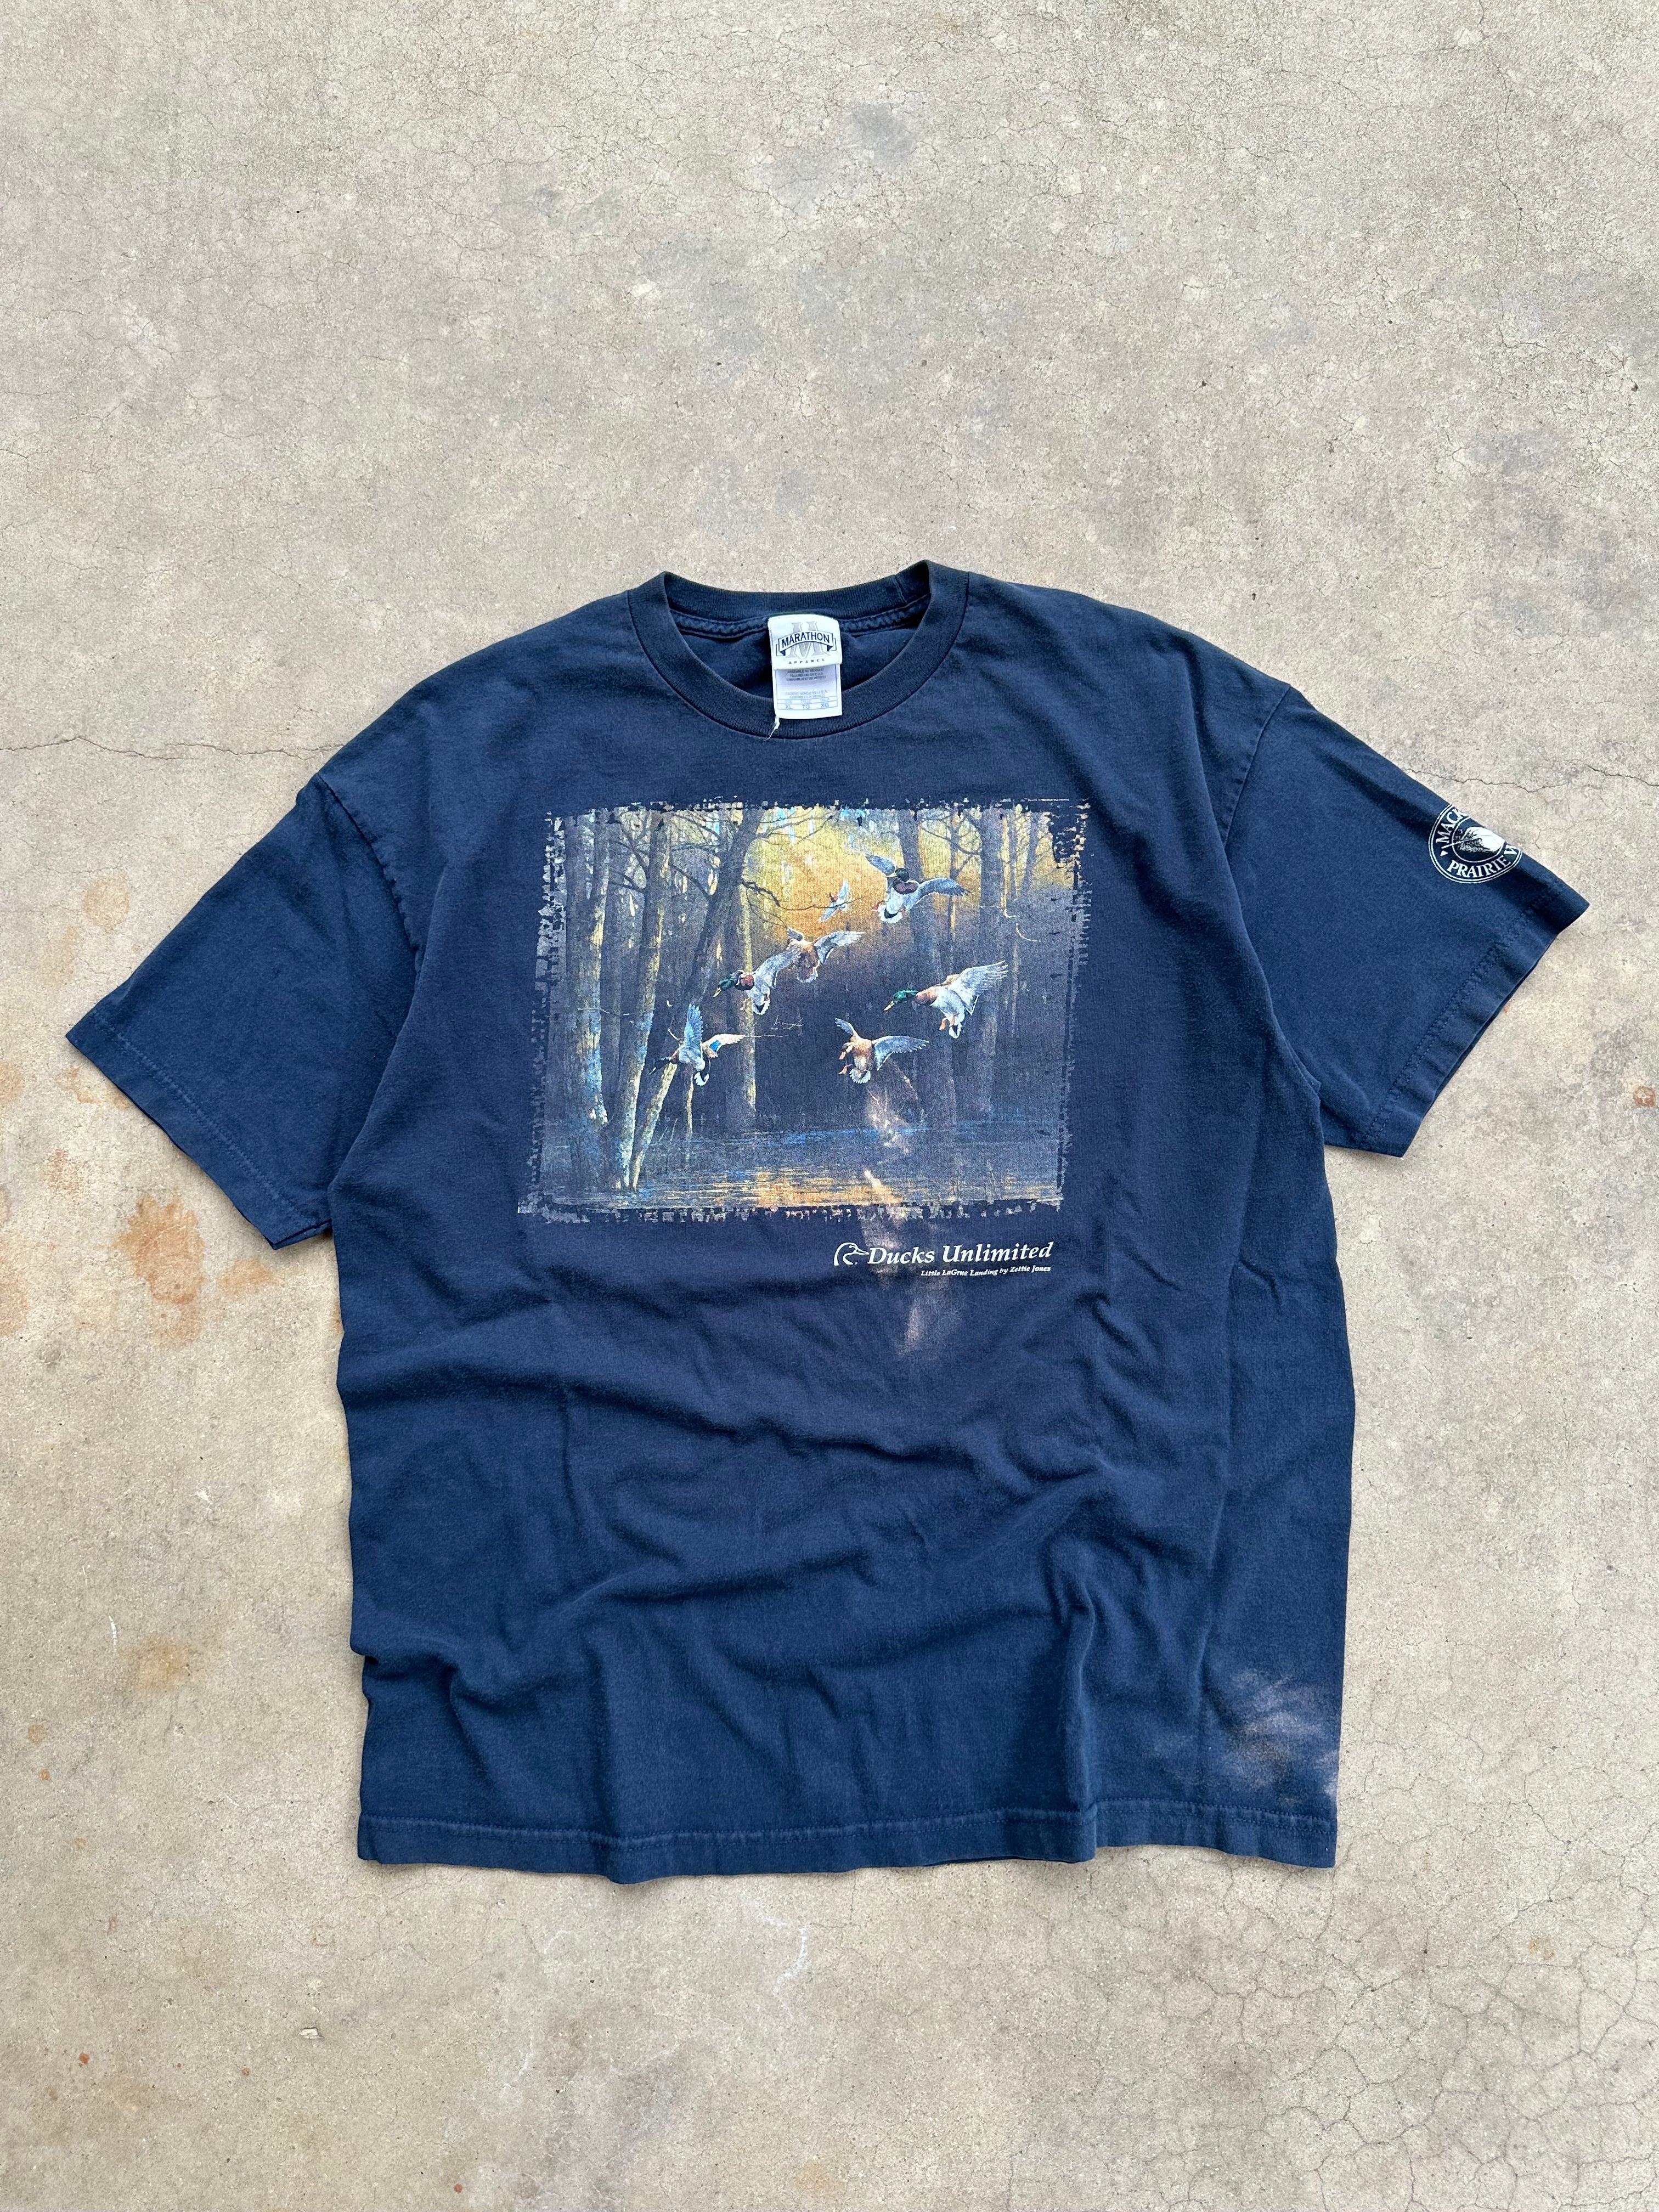 Vintage Ducks Unlimited T-Shirt (XL)